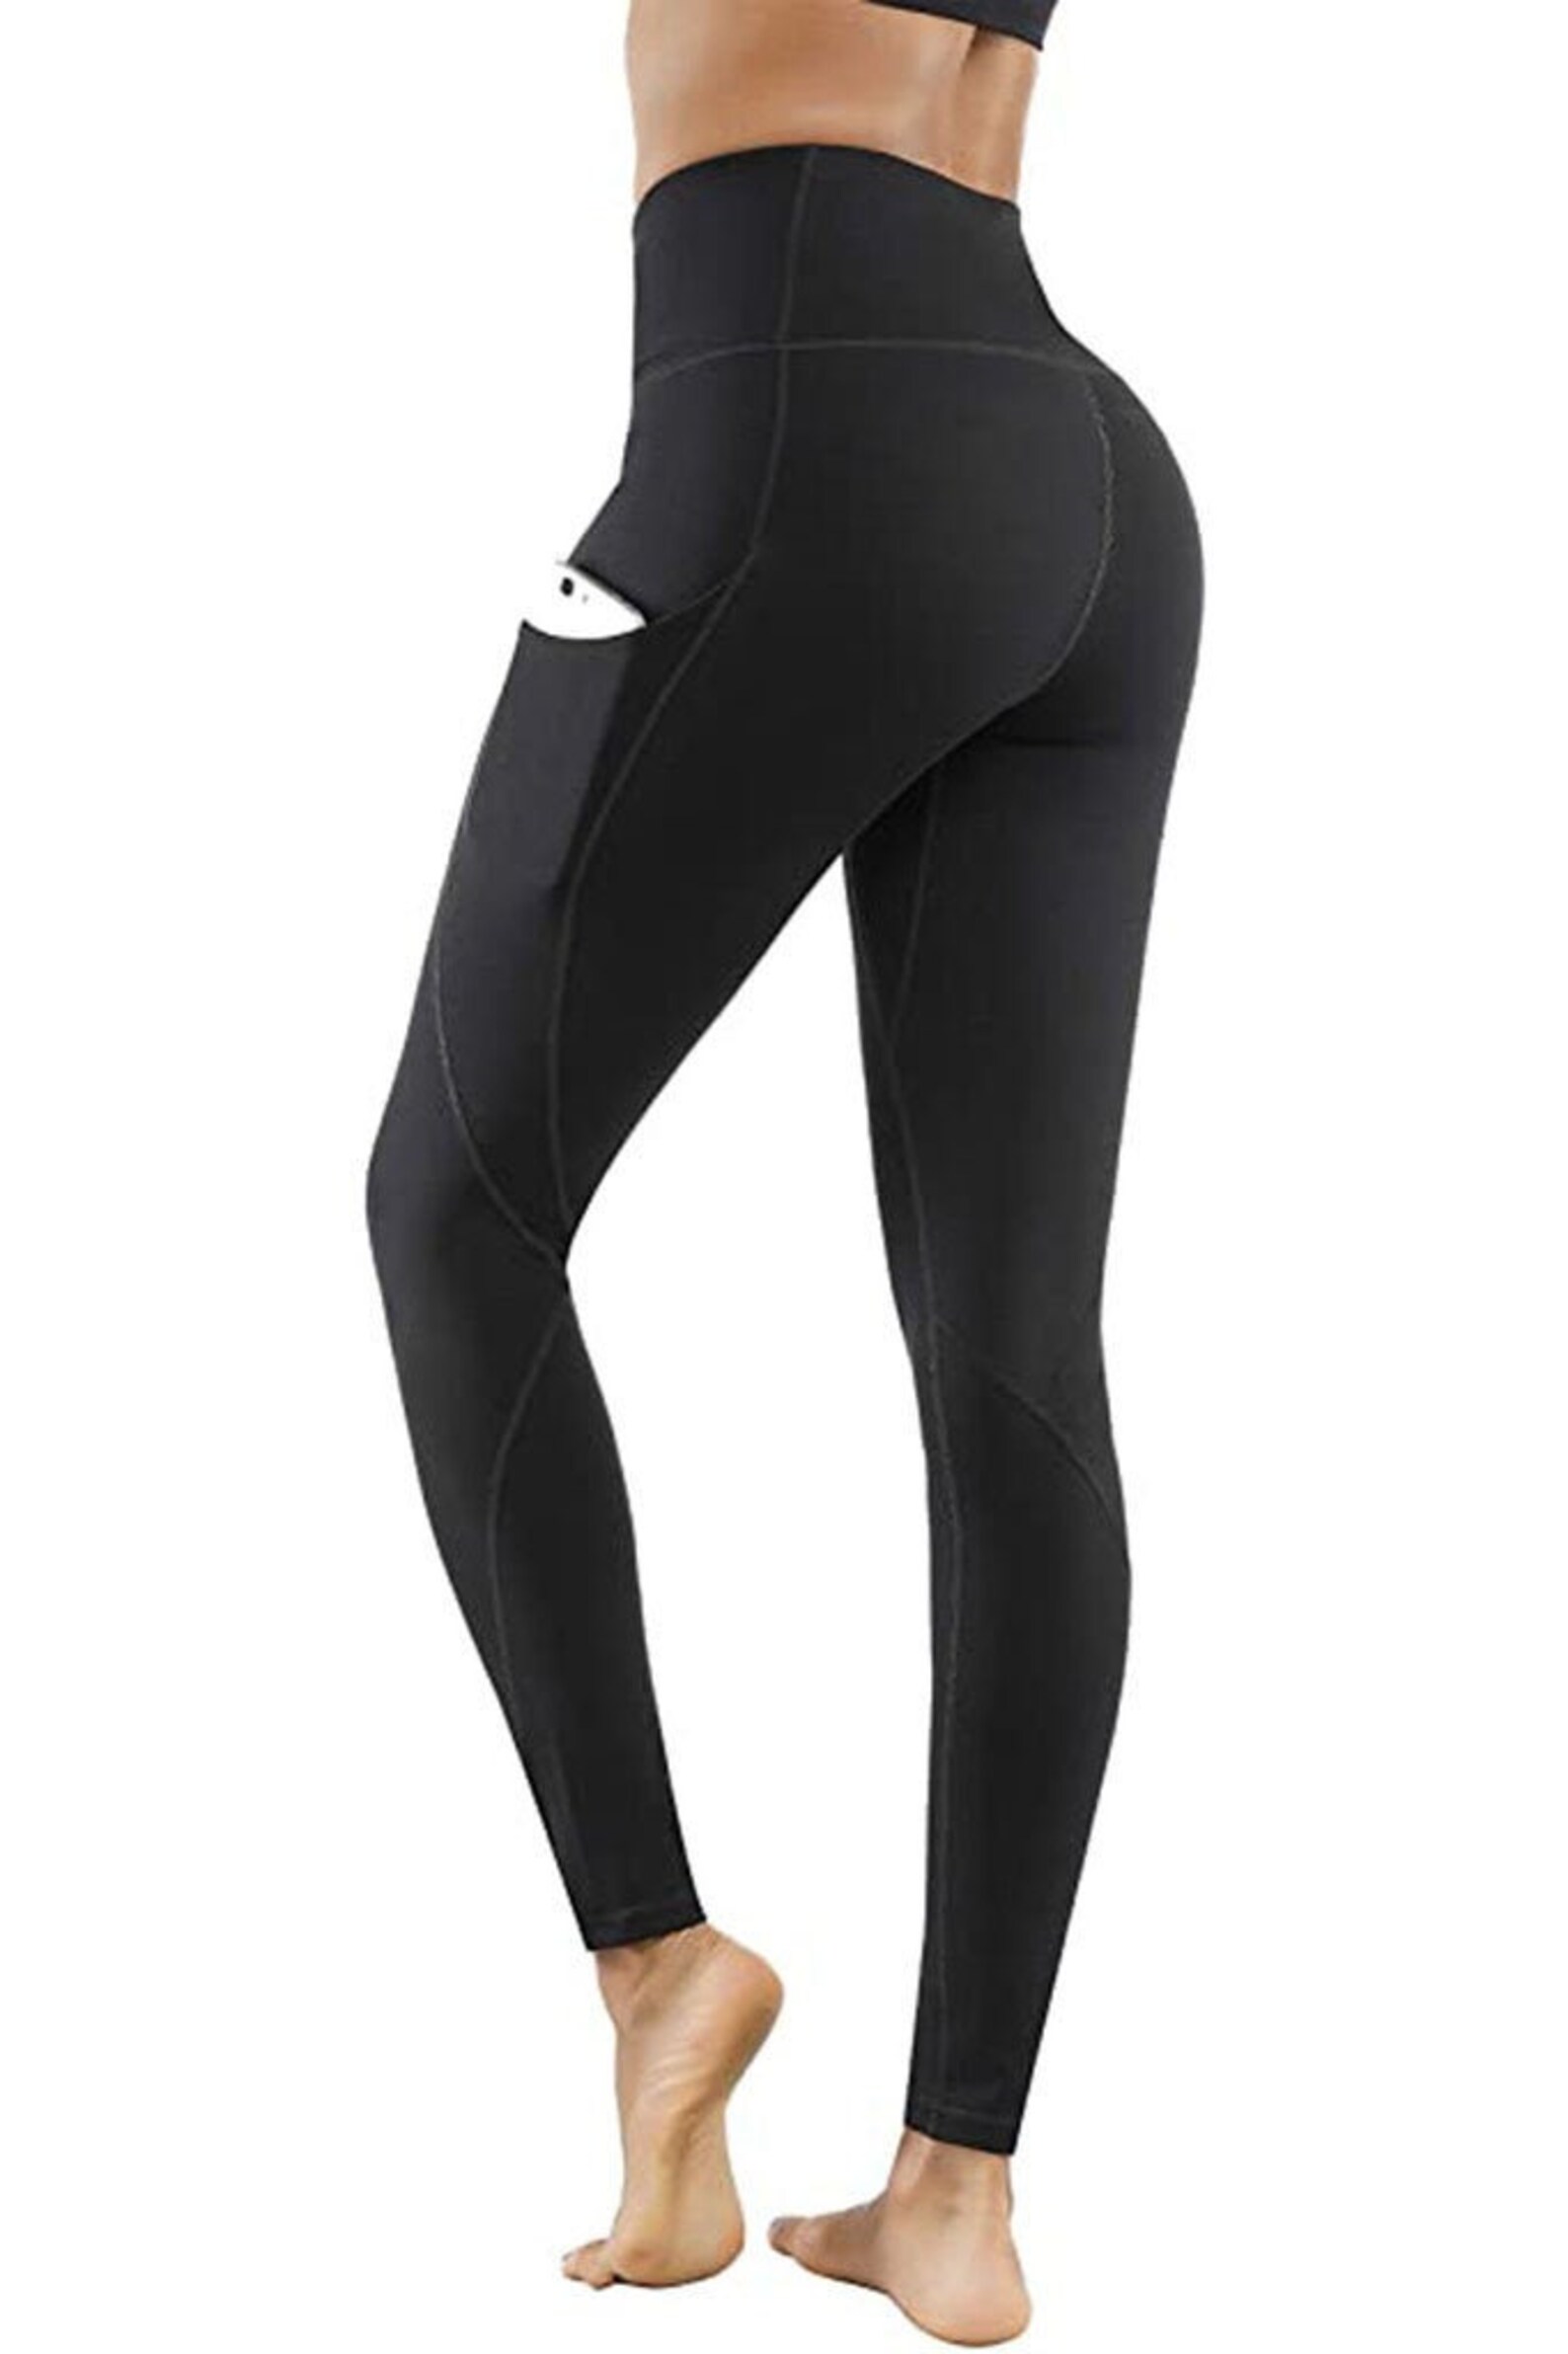 Black Yoga Pants Sport Leggings | Etsy